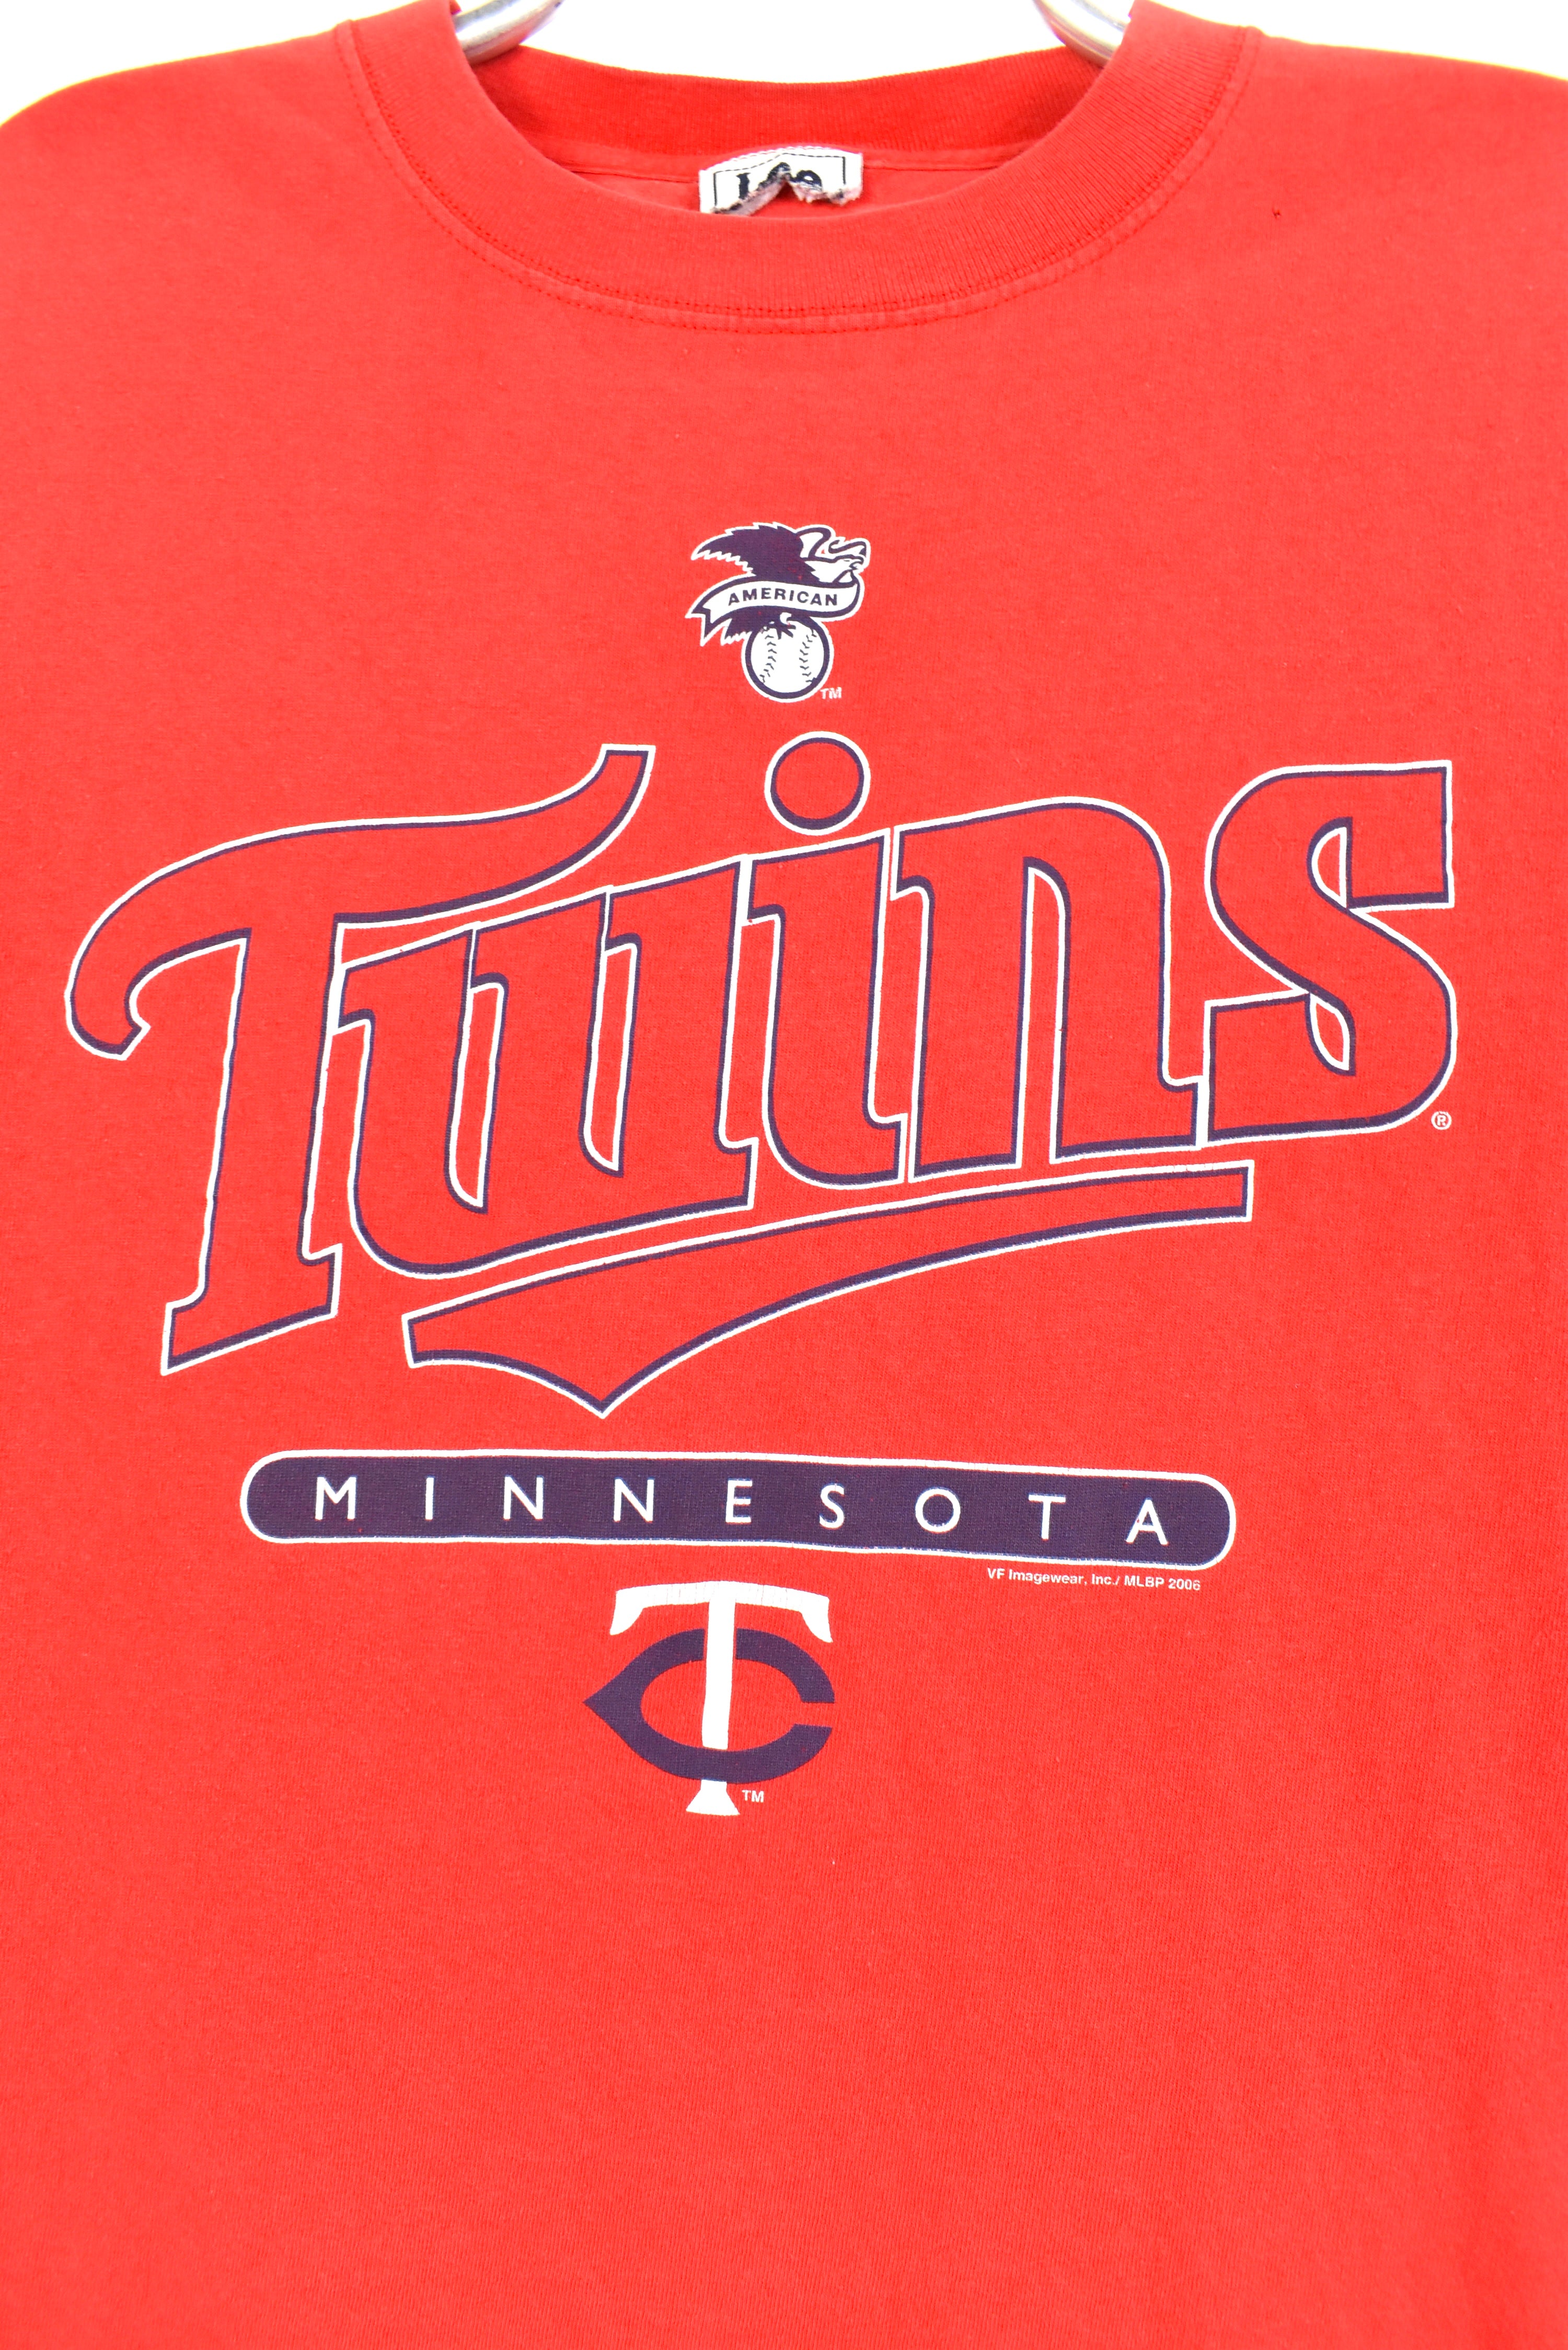 Vintage Minnesota twins shirt, MLB American baseball graphic tee - large, red PRO SPORT